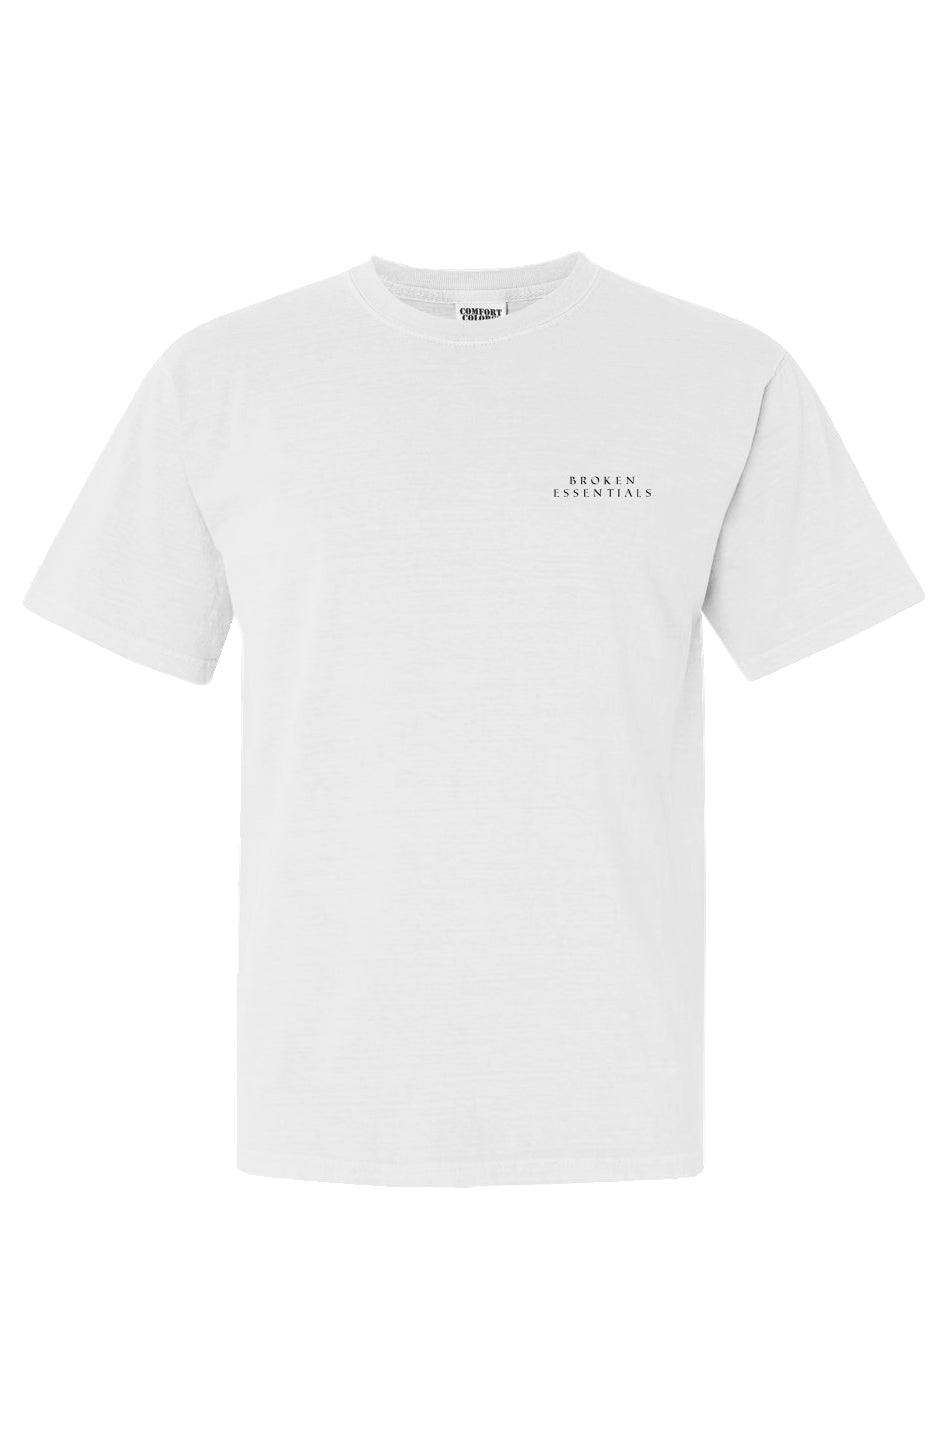 Awake Album T Shirt - White